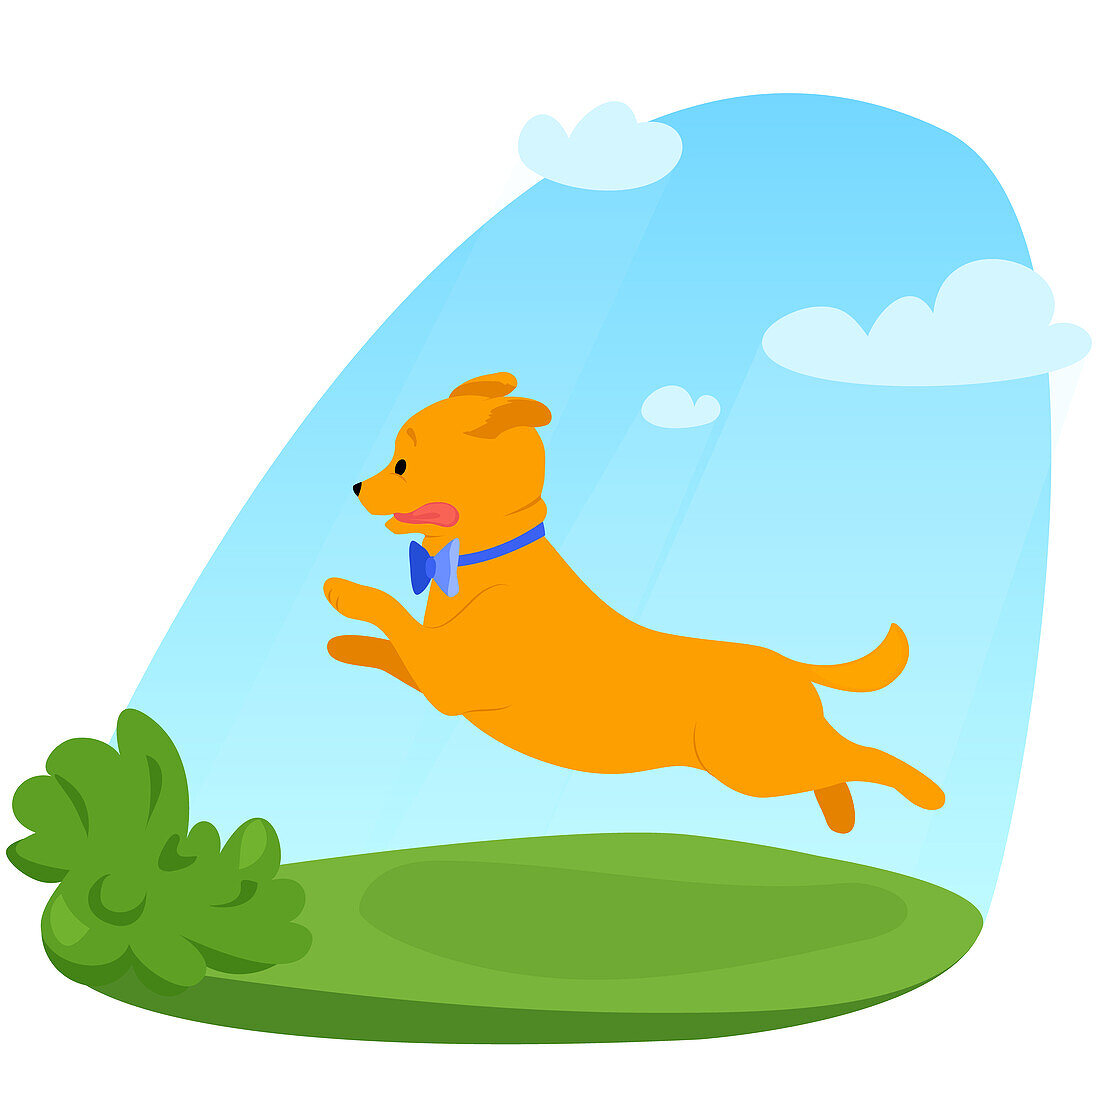 Dog training, conceptual illustration